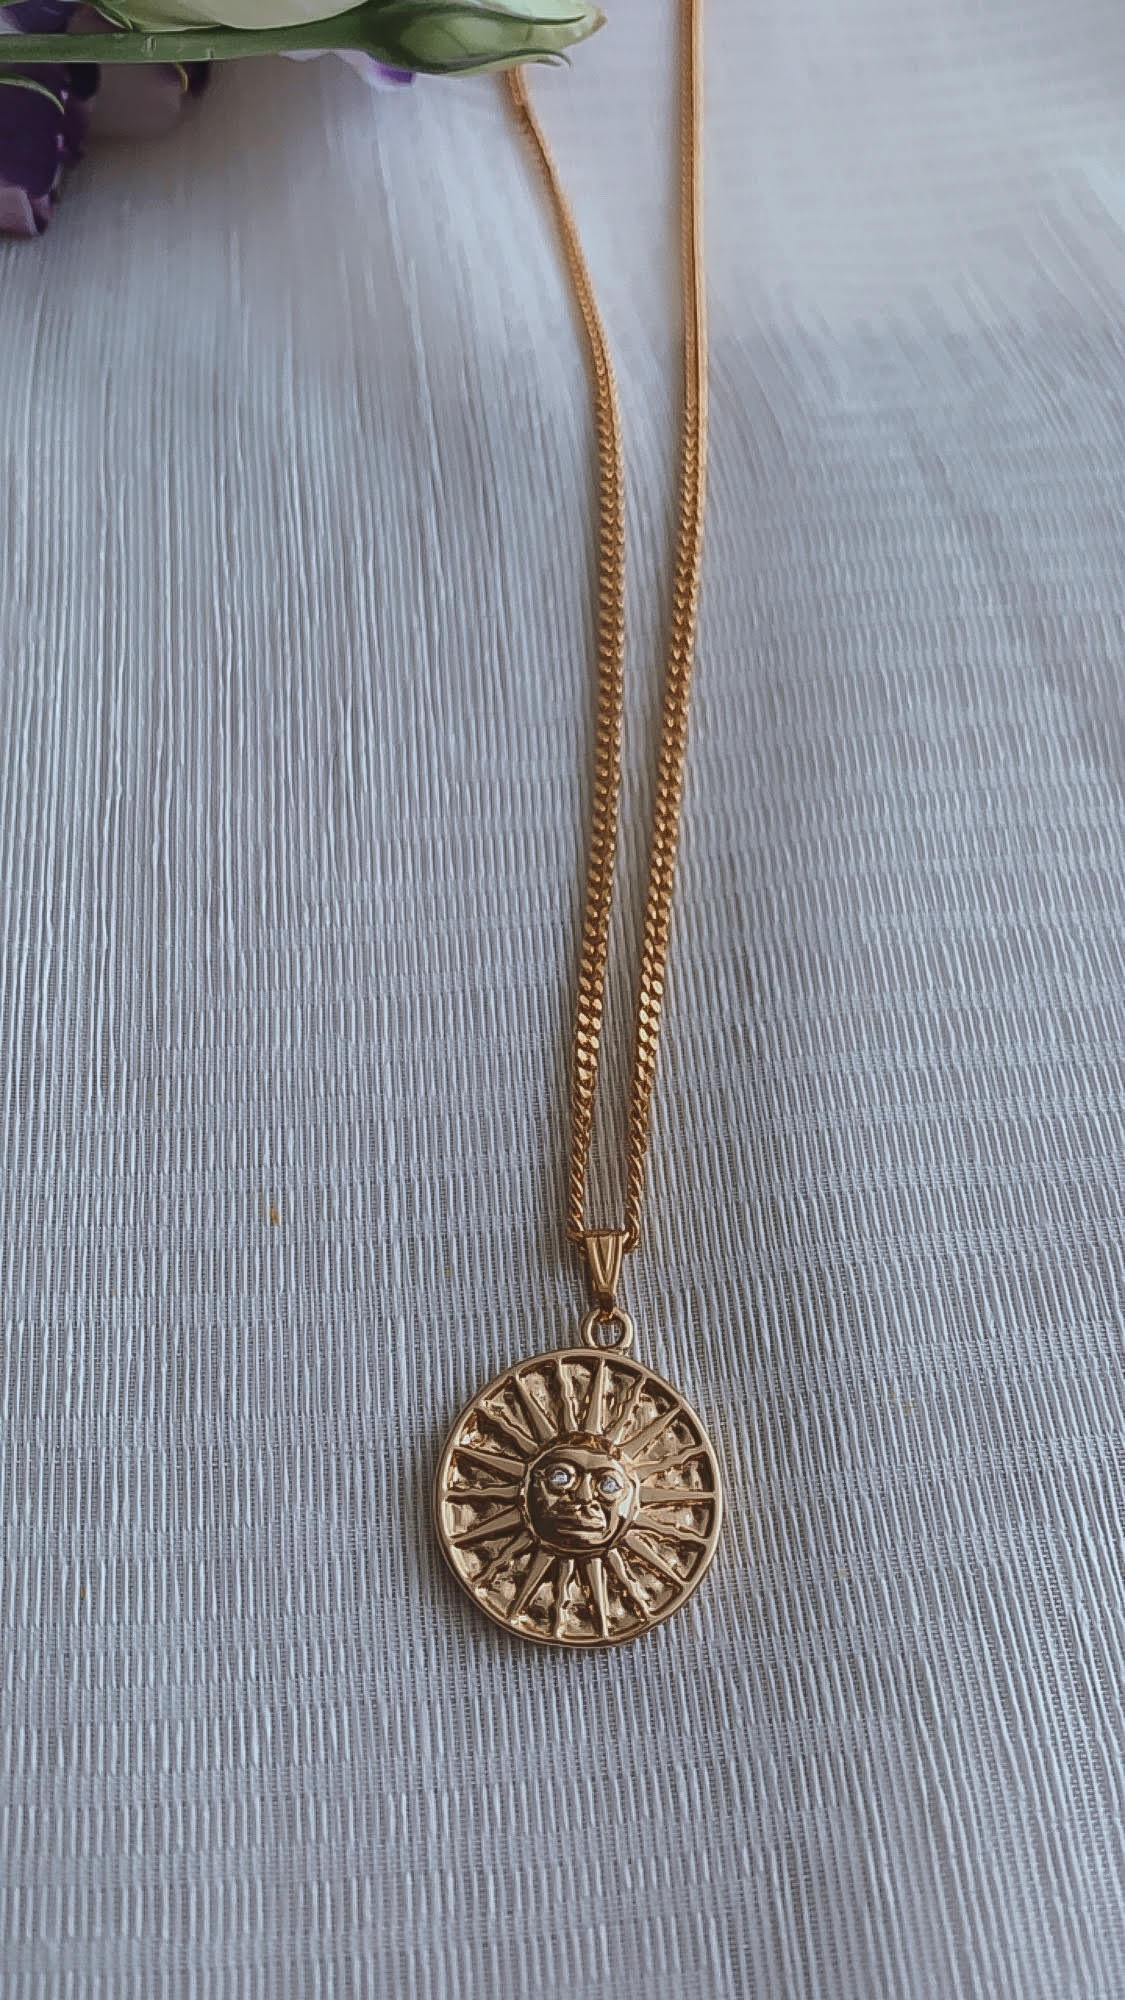 Gold Sun Coin Necklace Sun Medallion Gold Necklace Sun Pendant Necklace ...